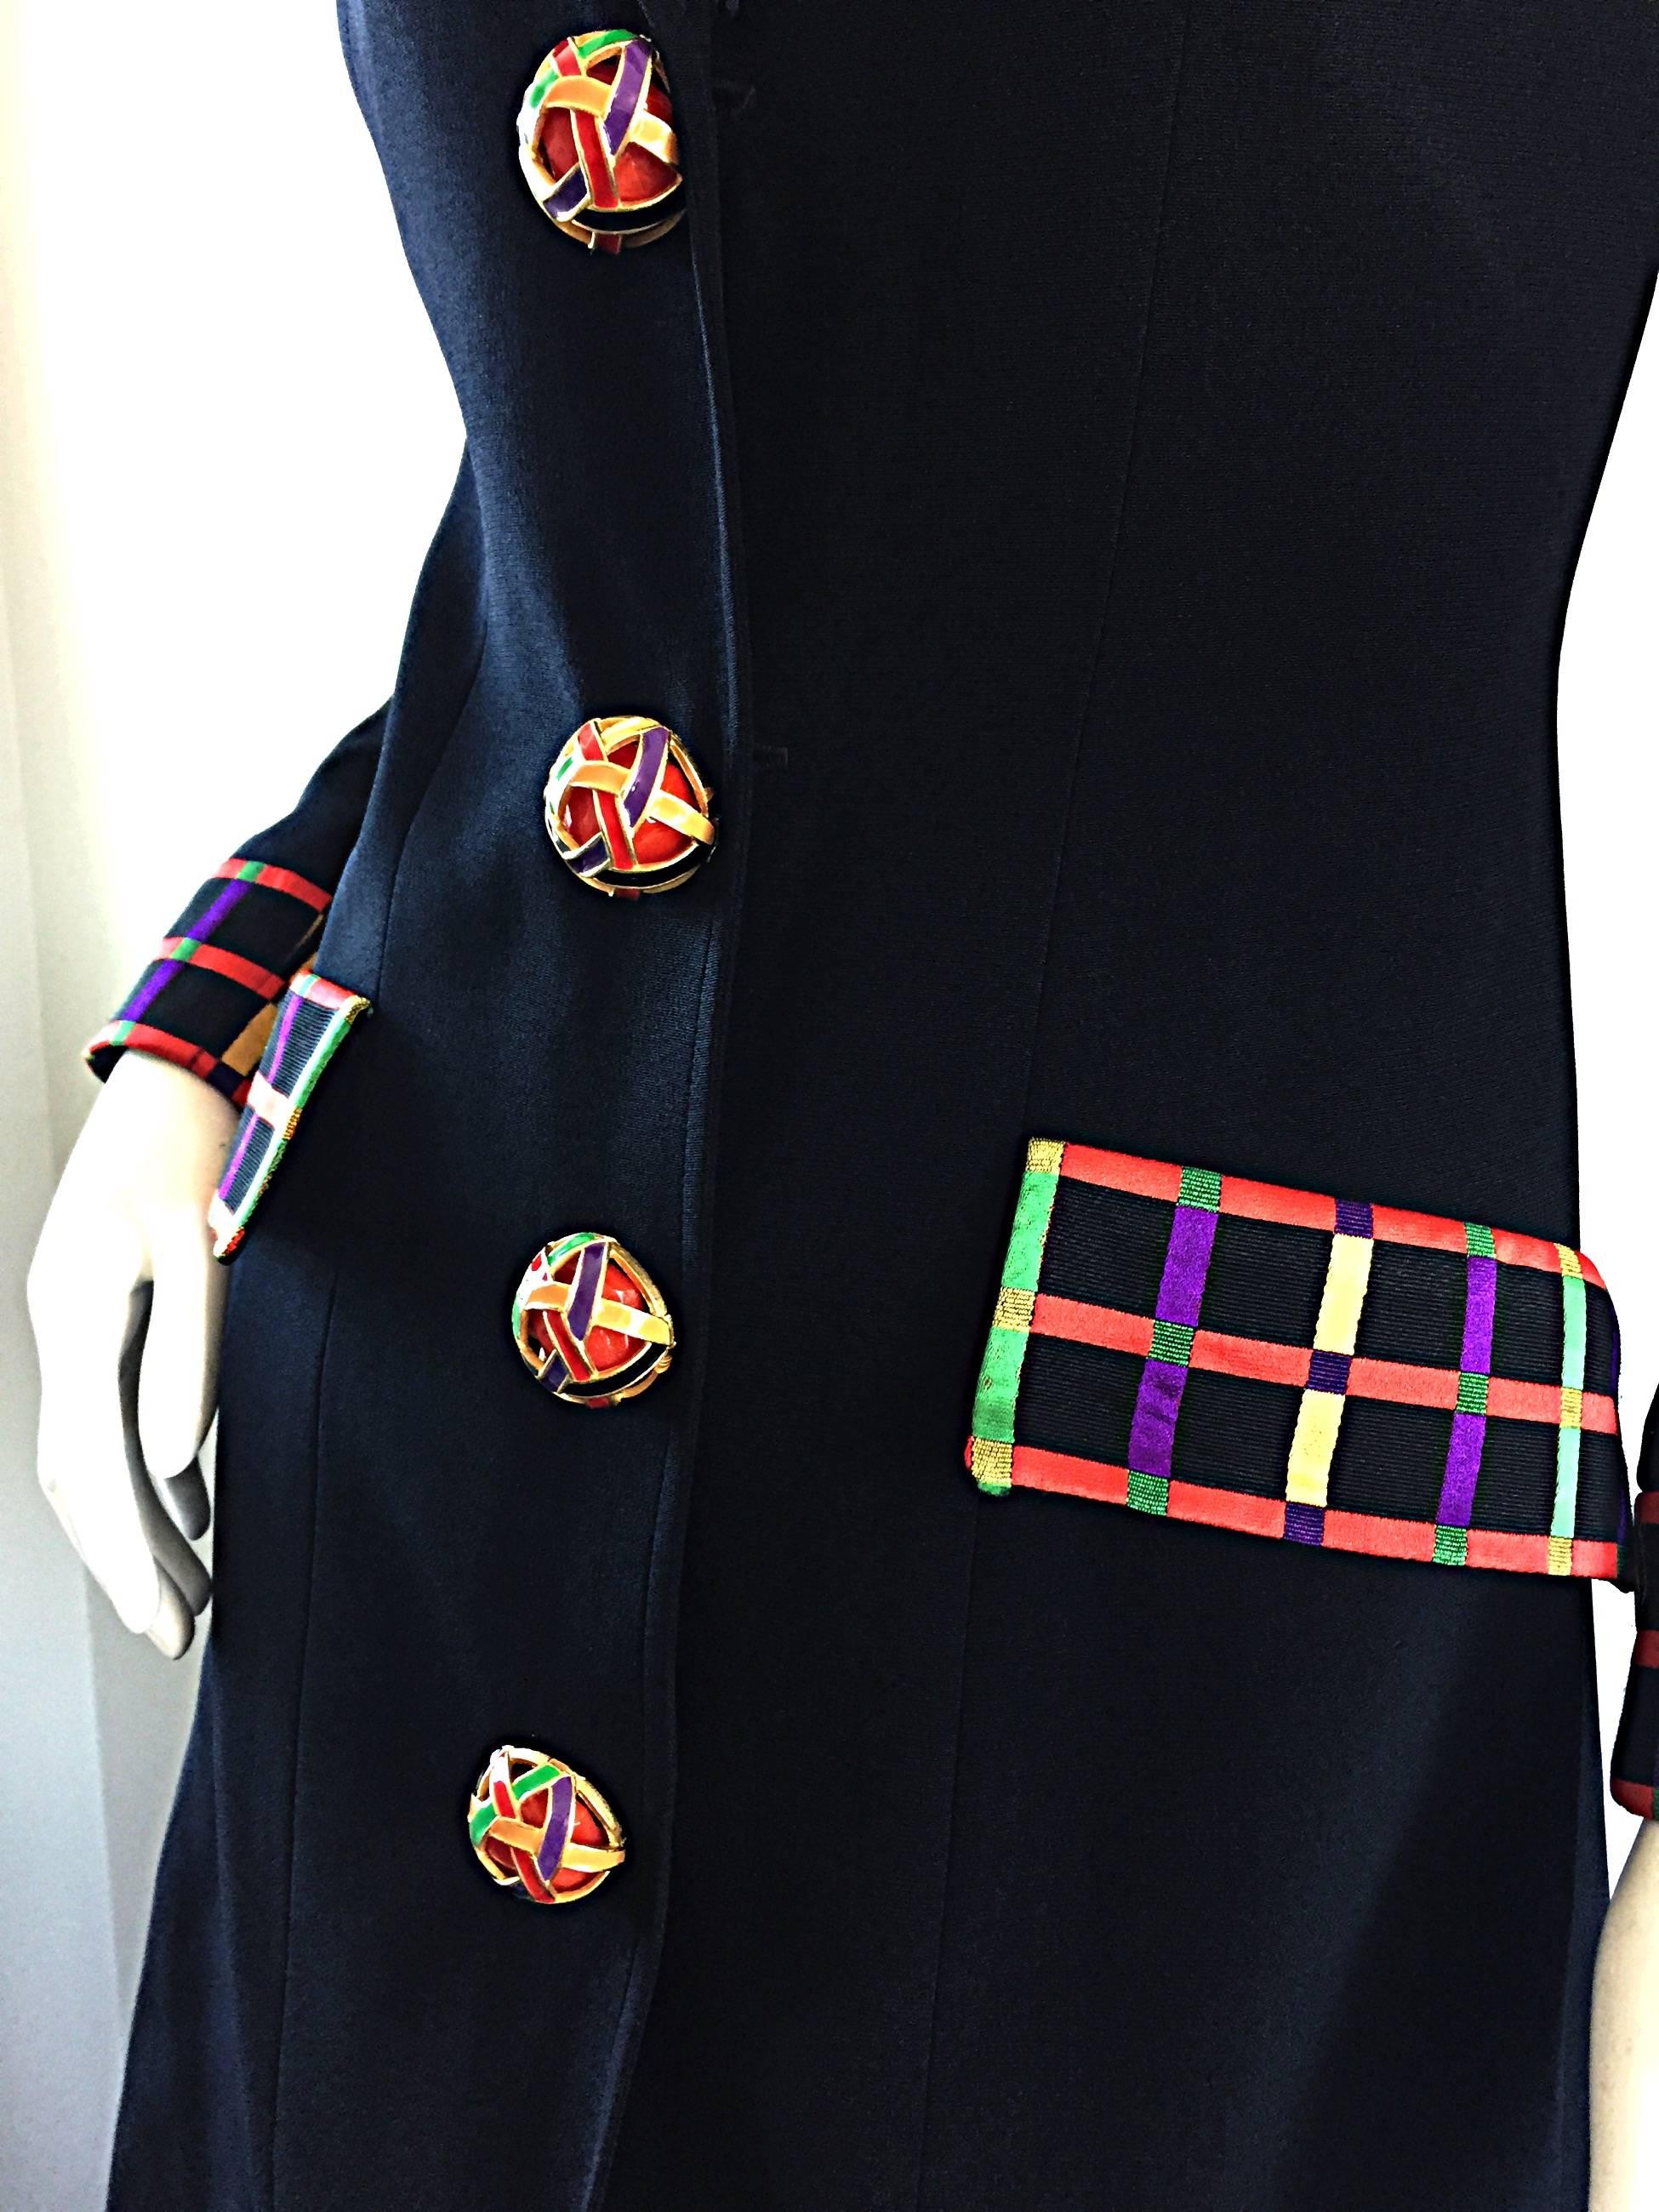 Vintage Kathryn Dianos Black Jacket Dress w/ Plaid Details + Dome Buttons 5